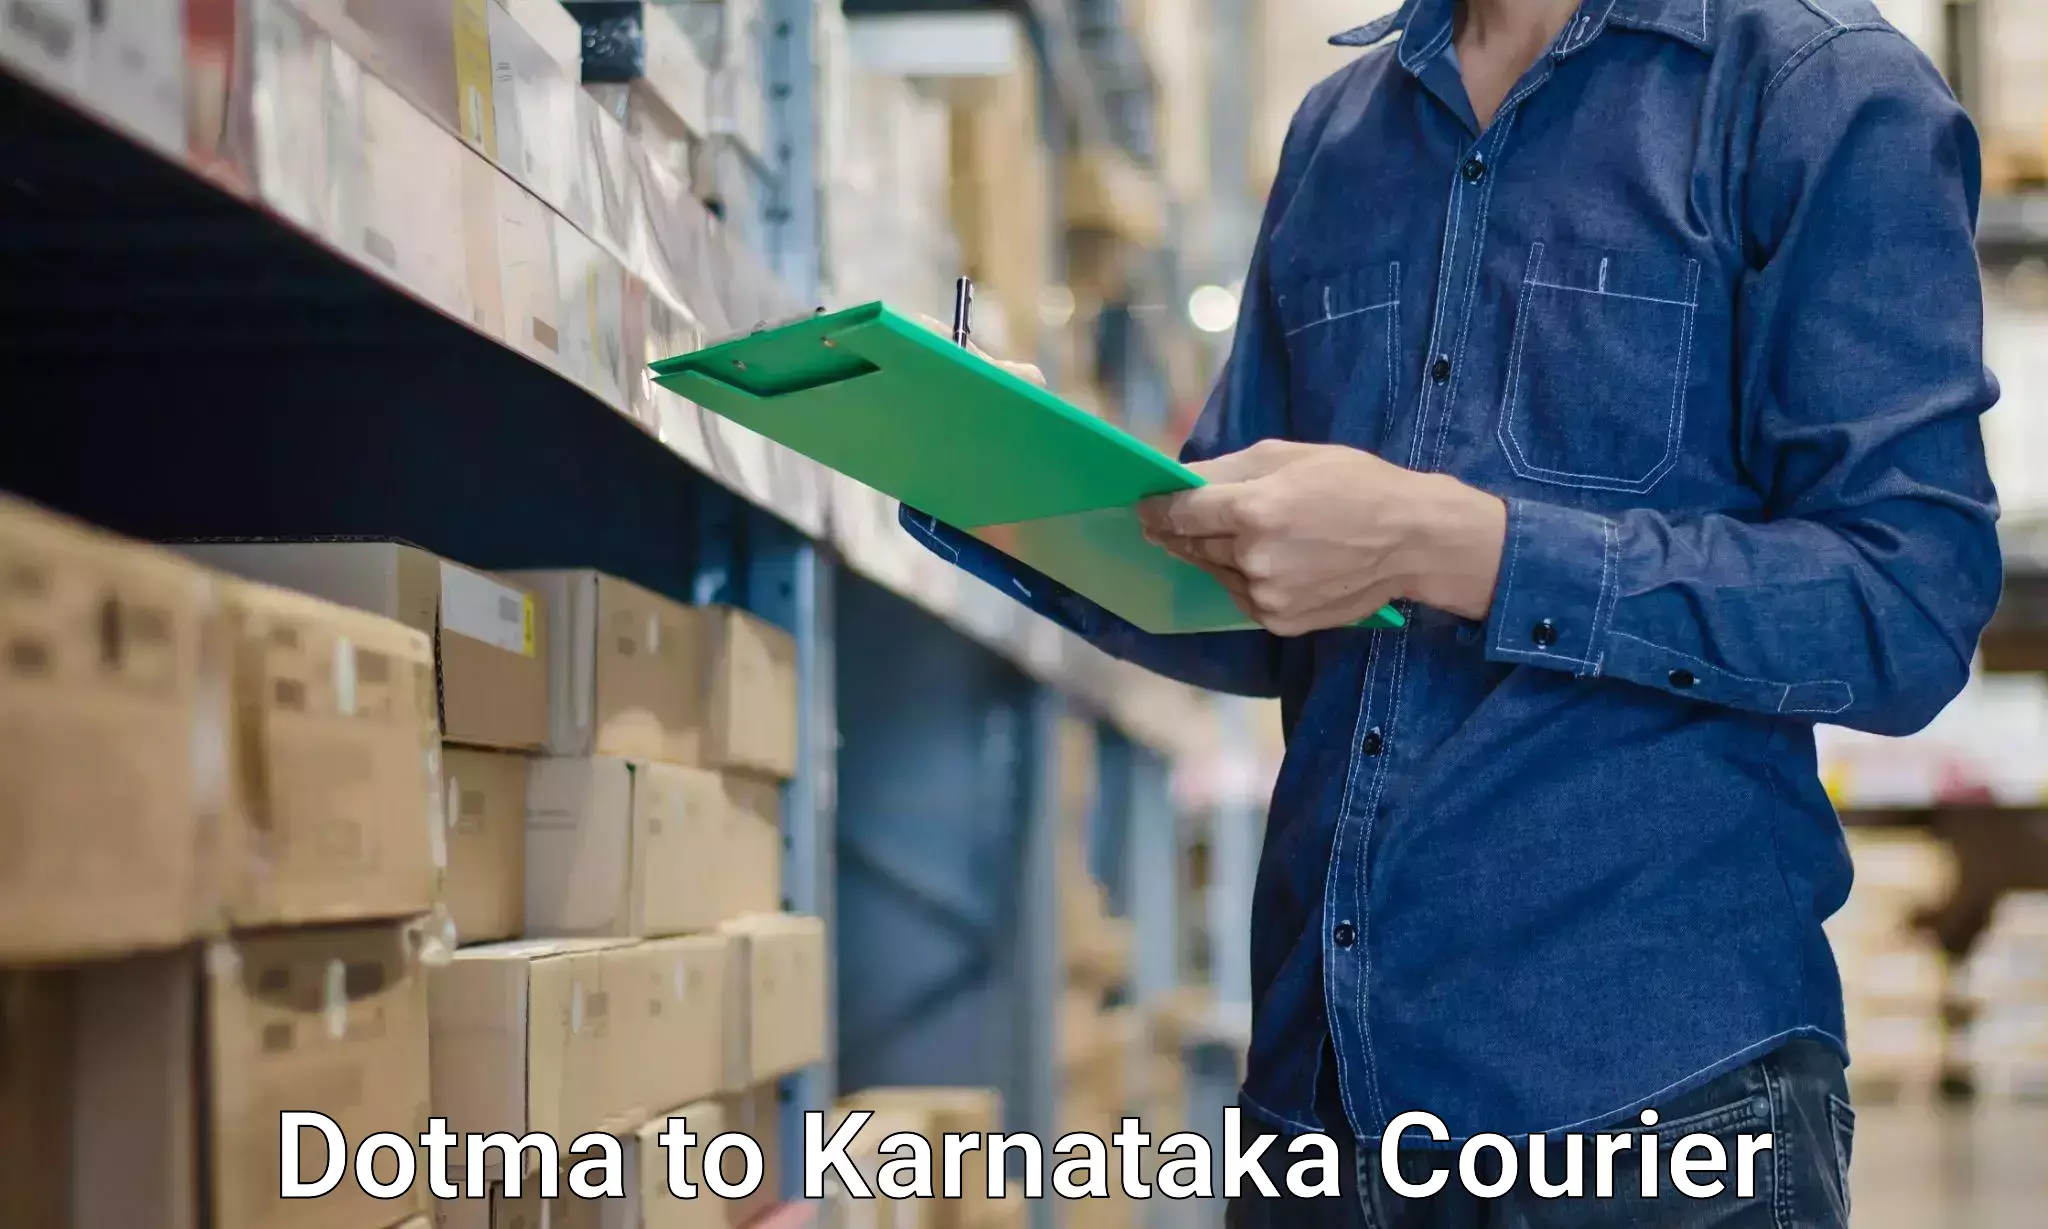 Home relocation experts Dotma to Karnataka